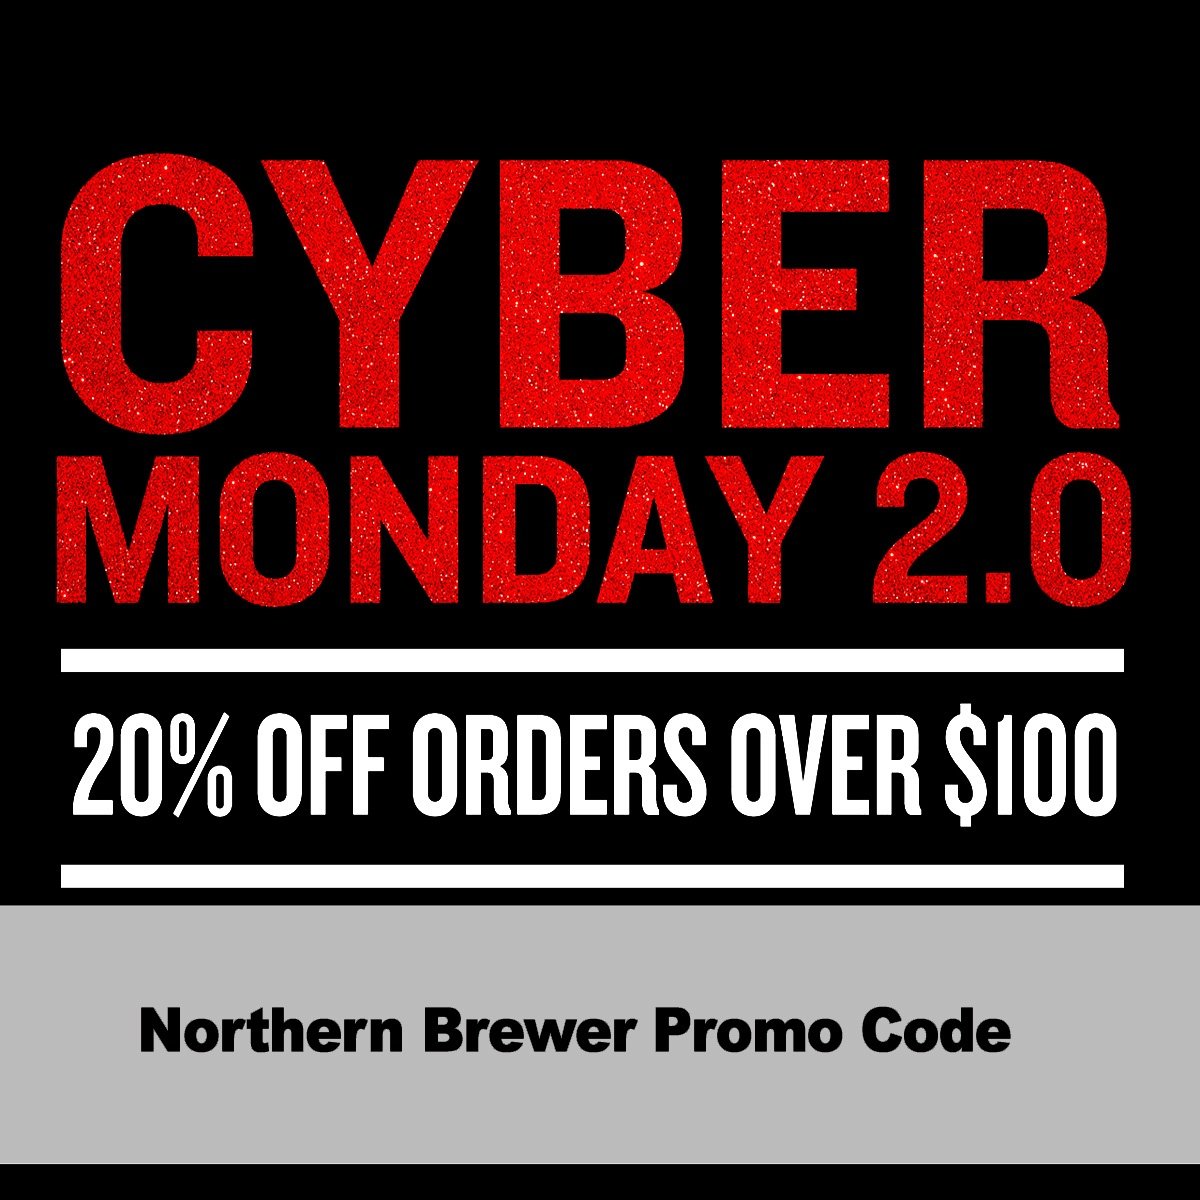 NorthernBrewer.com Cyber Monday 2 Promo Code